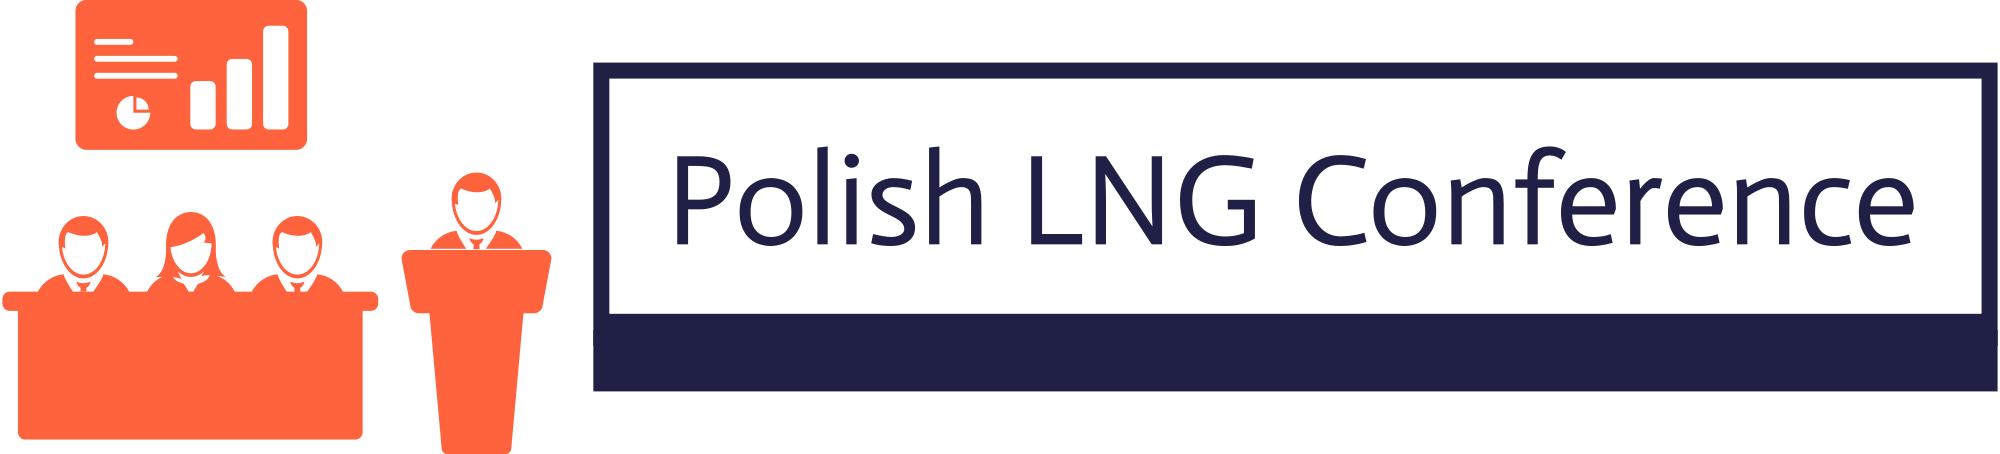 Polish LNG Conference - Home